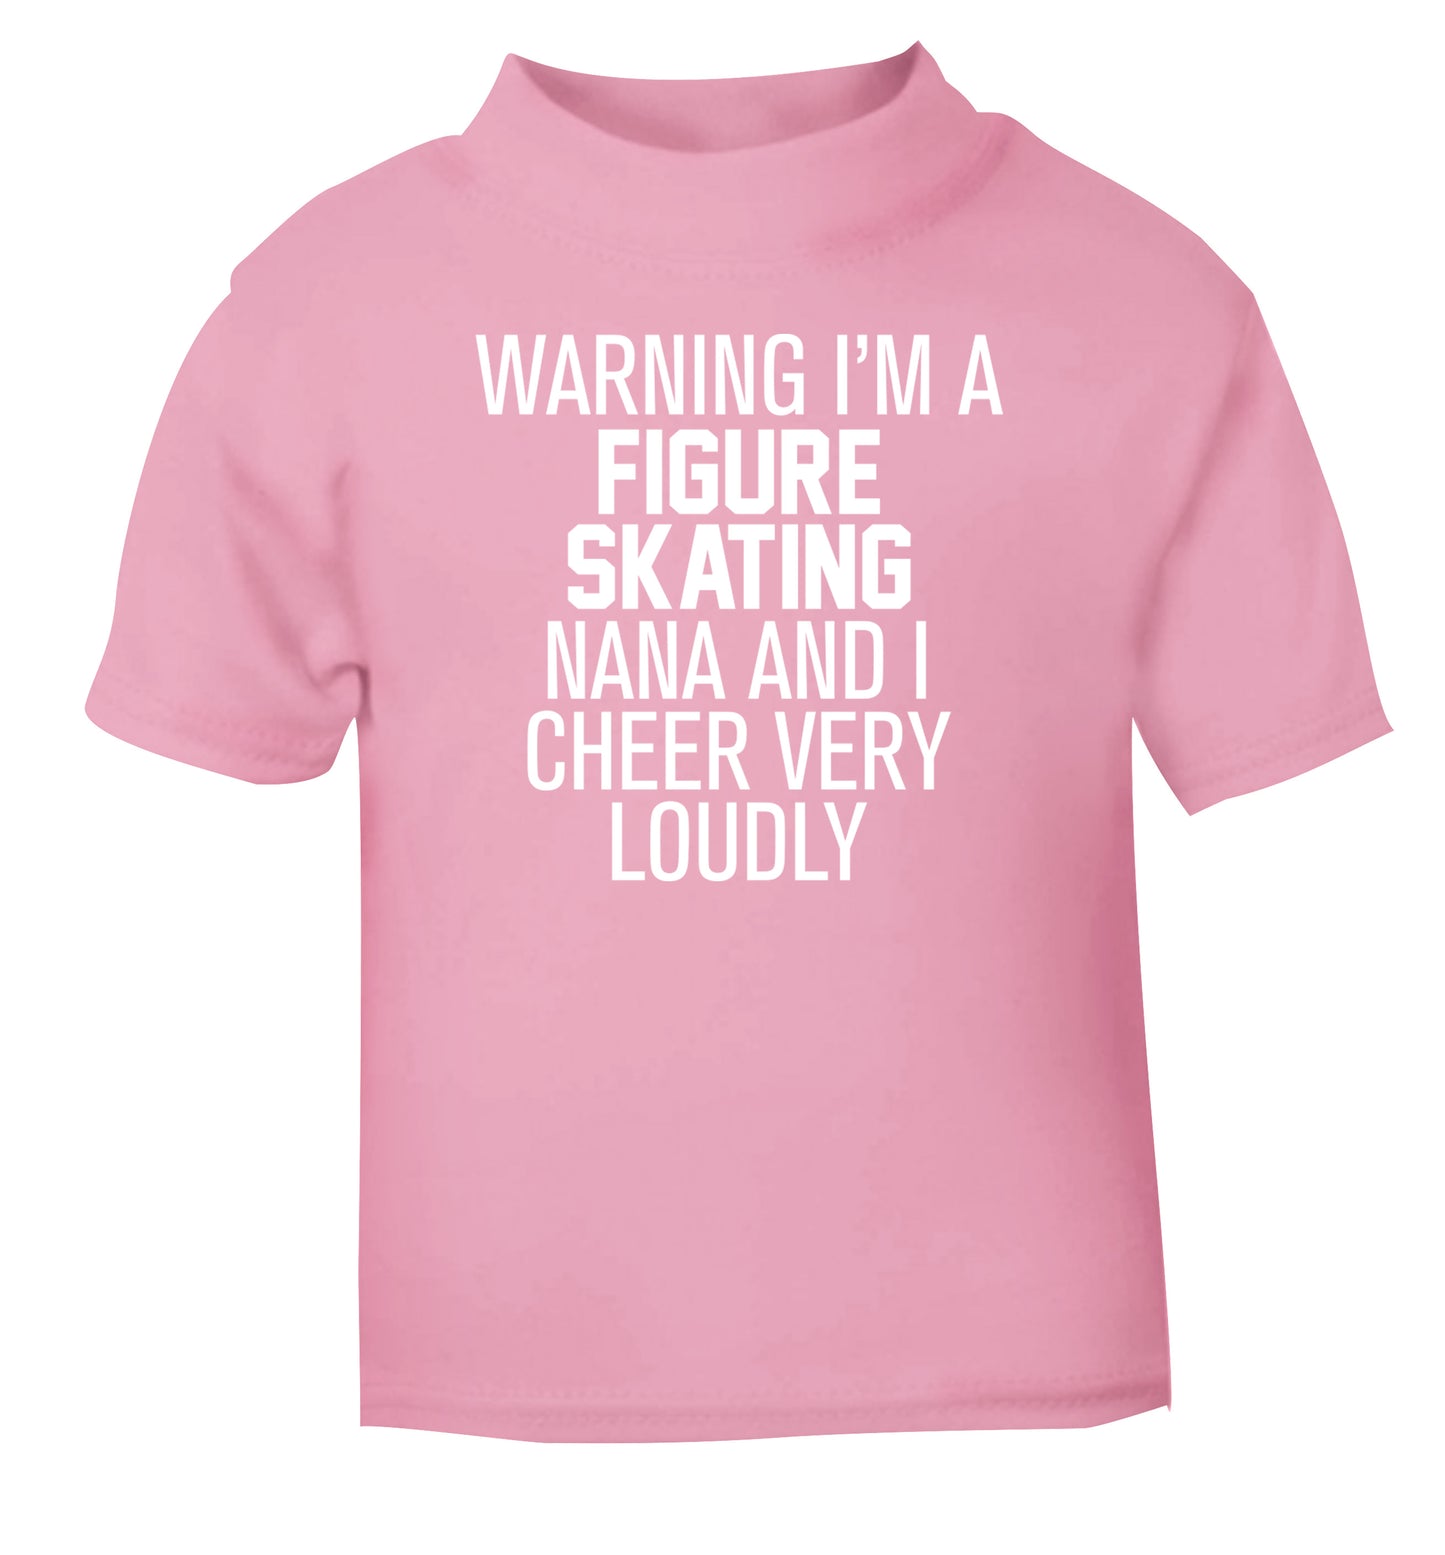 Warning I'm a figure skating nana and I cheer very loudly light pink Baby Toddler Tshirt 2 Years